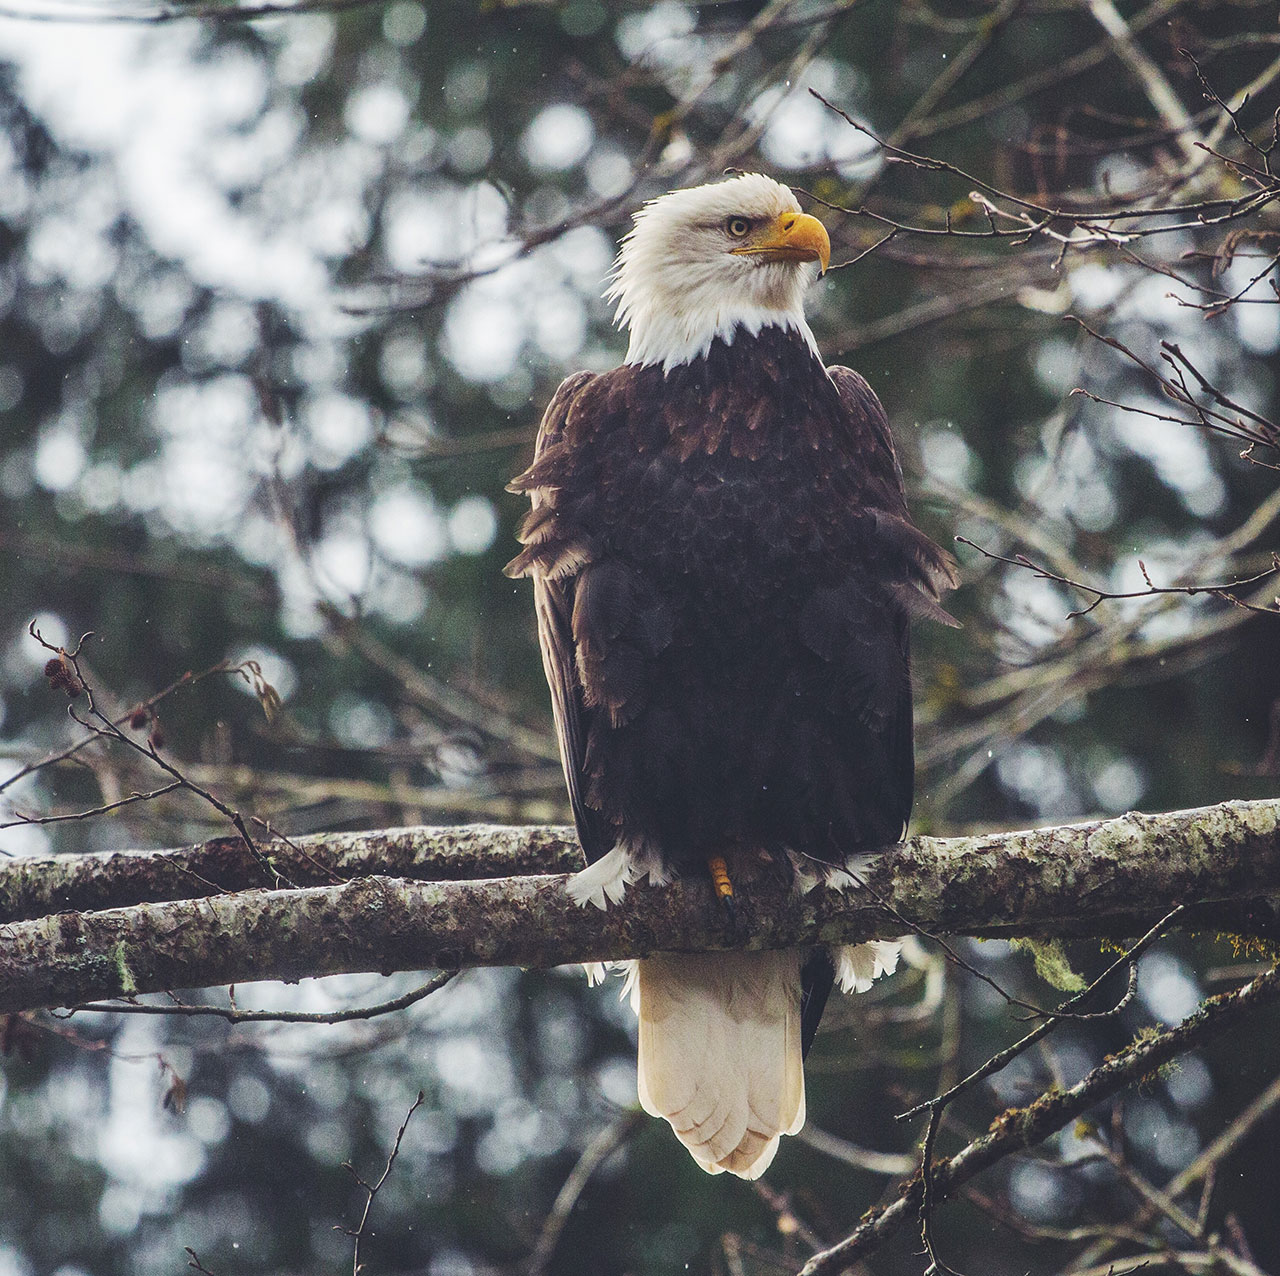 A bald eagle perched above the Squamish River, British Columbia, Canada.